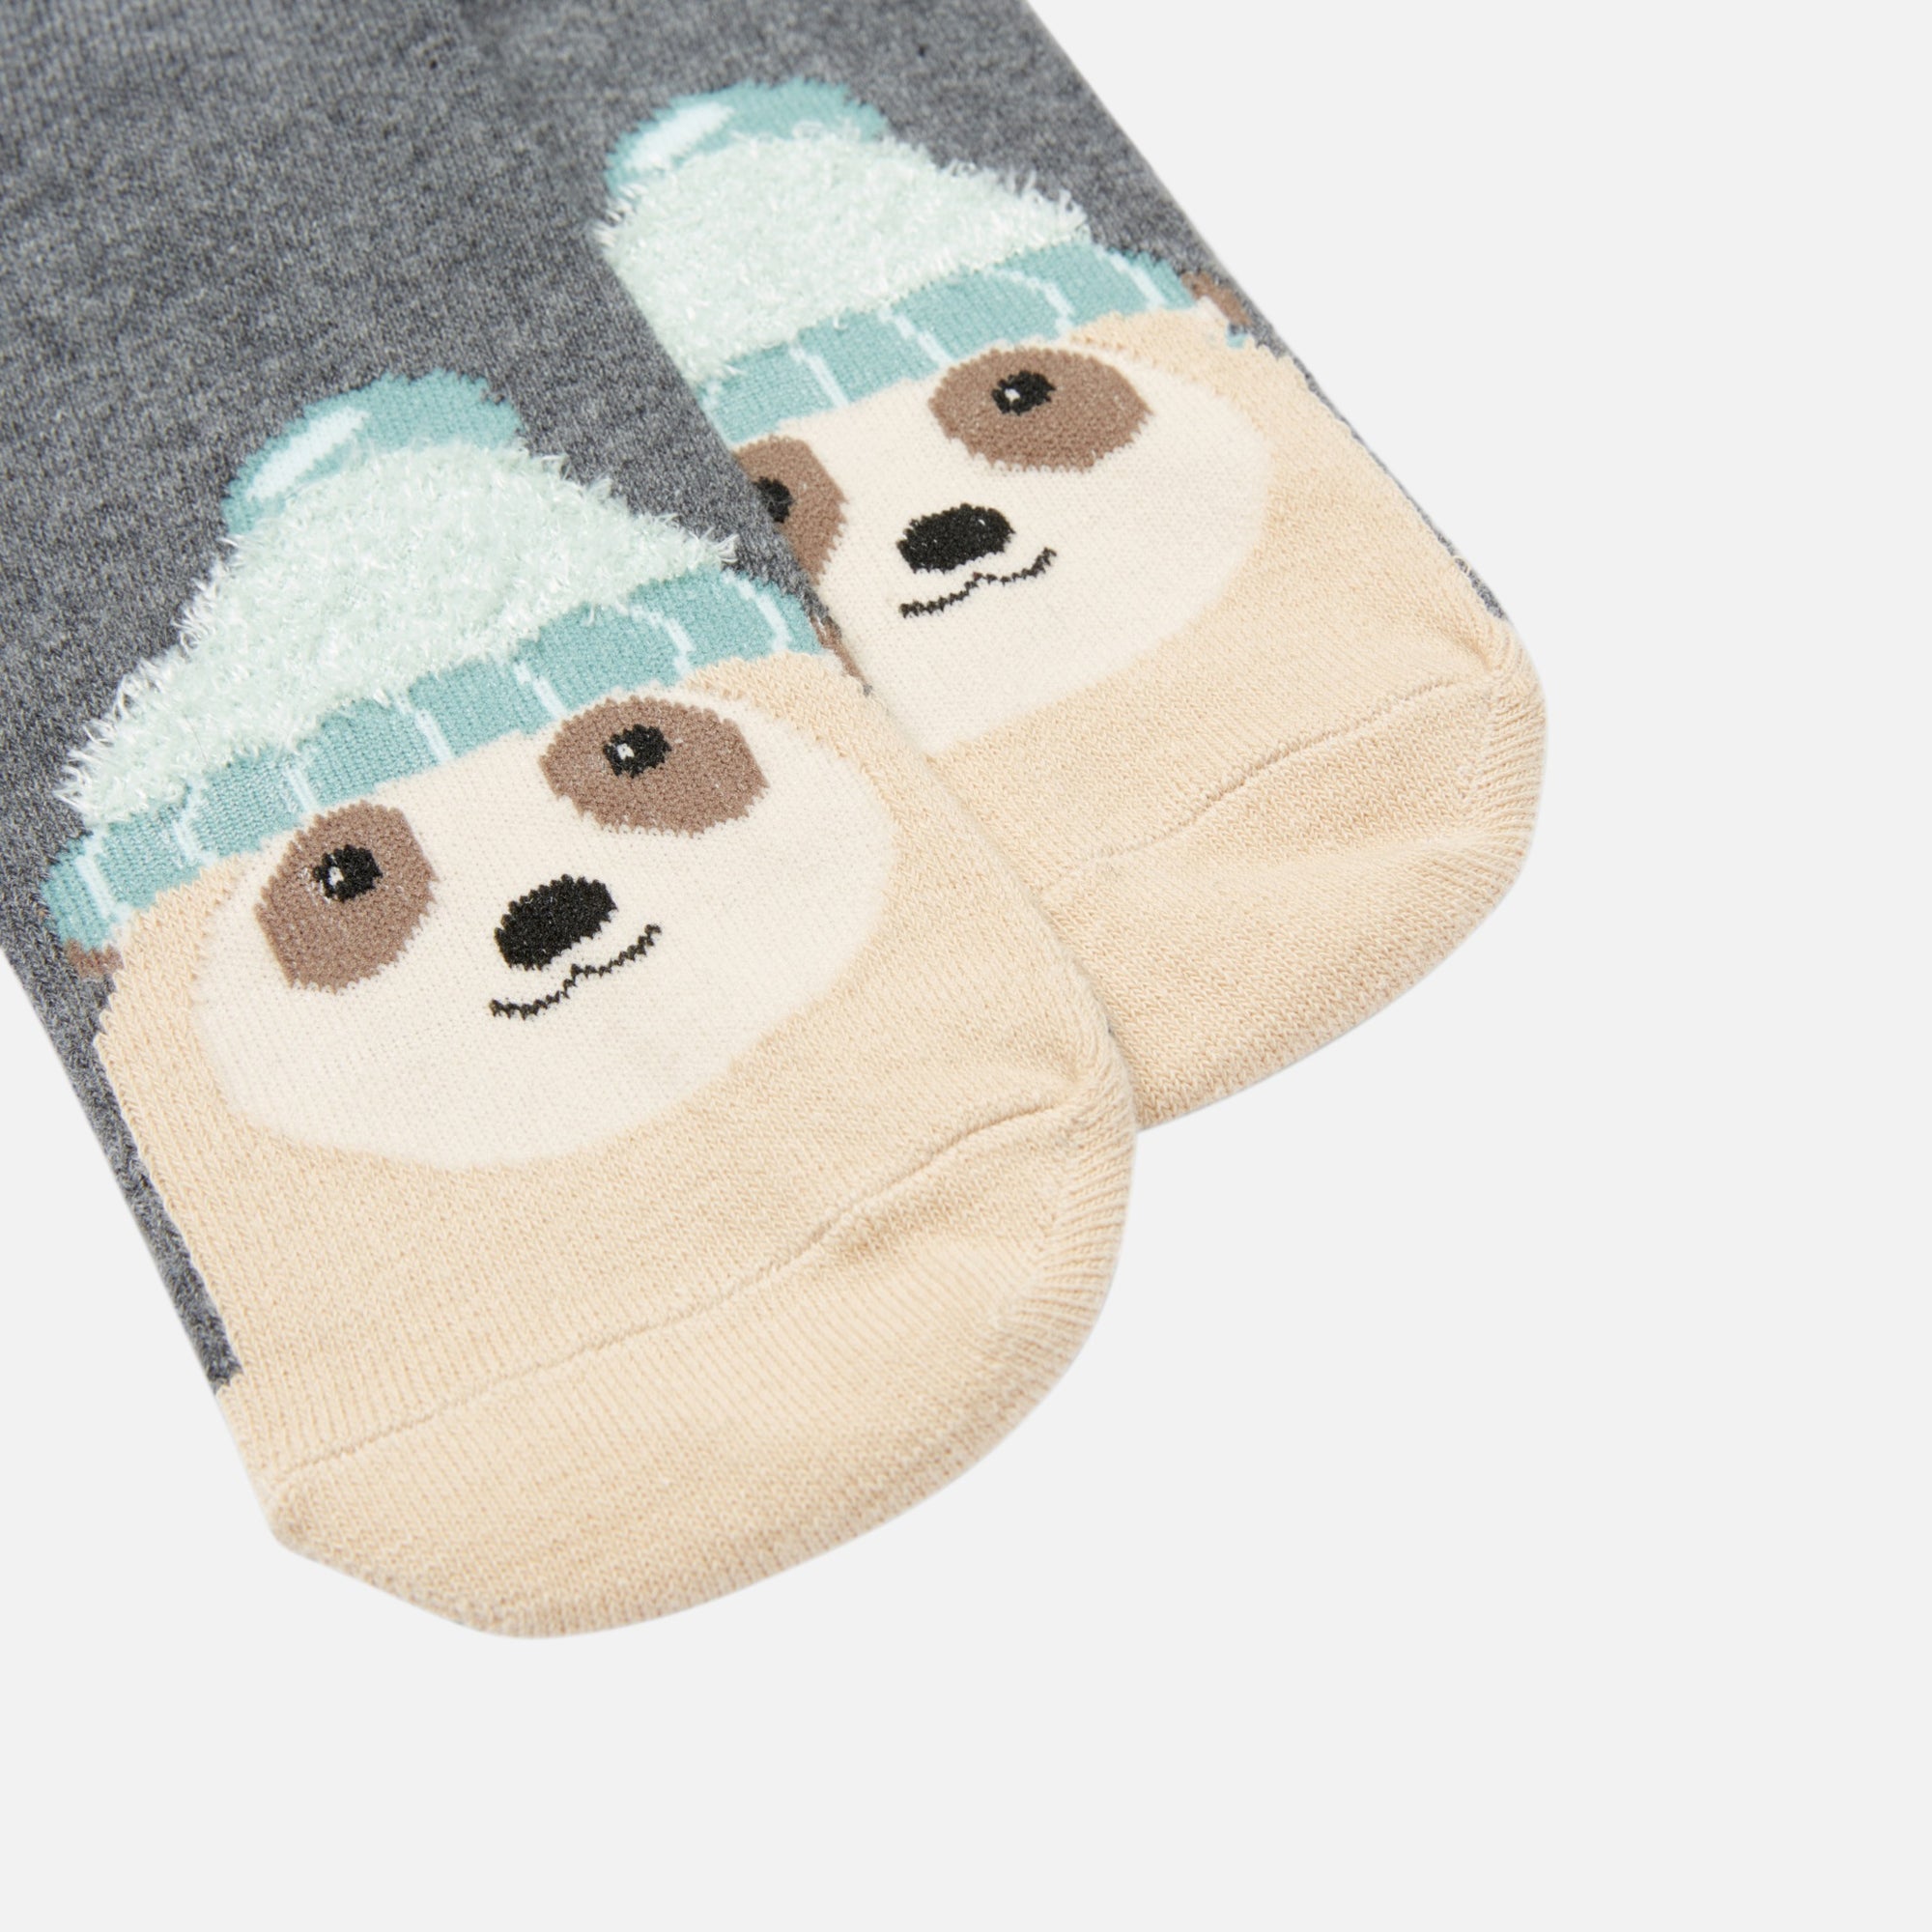 Dark grey socks with stripes and sloth 